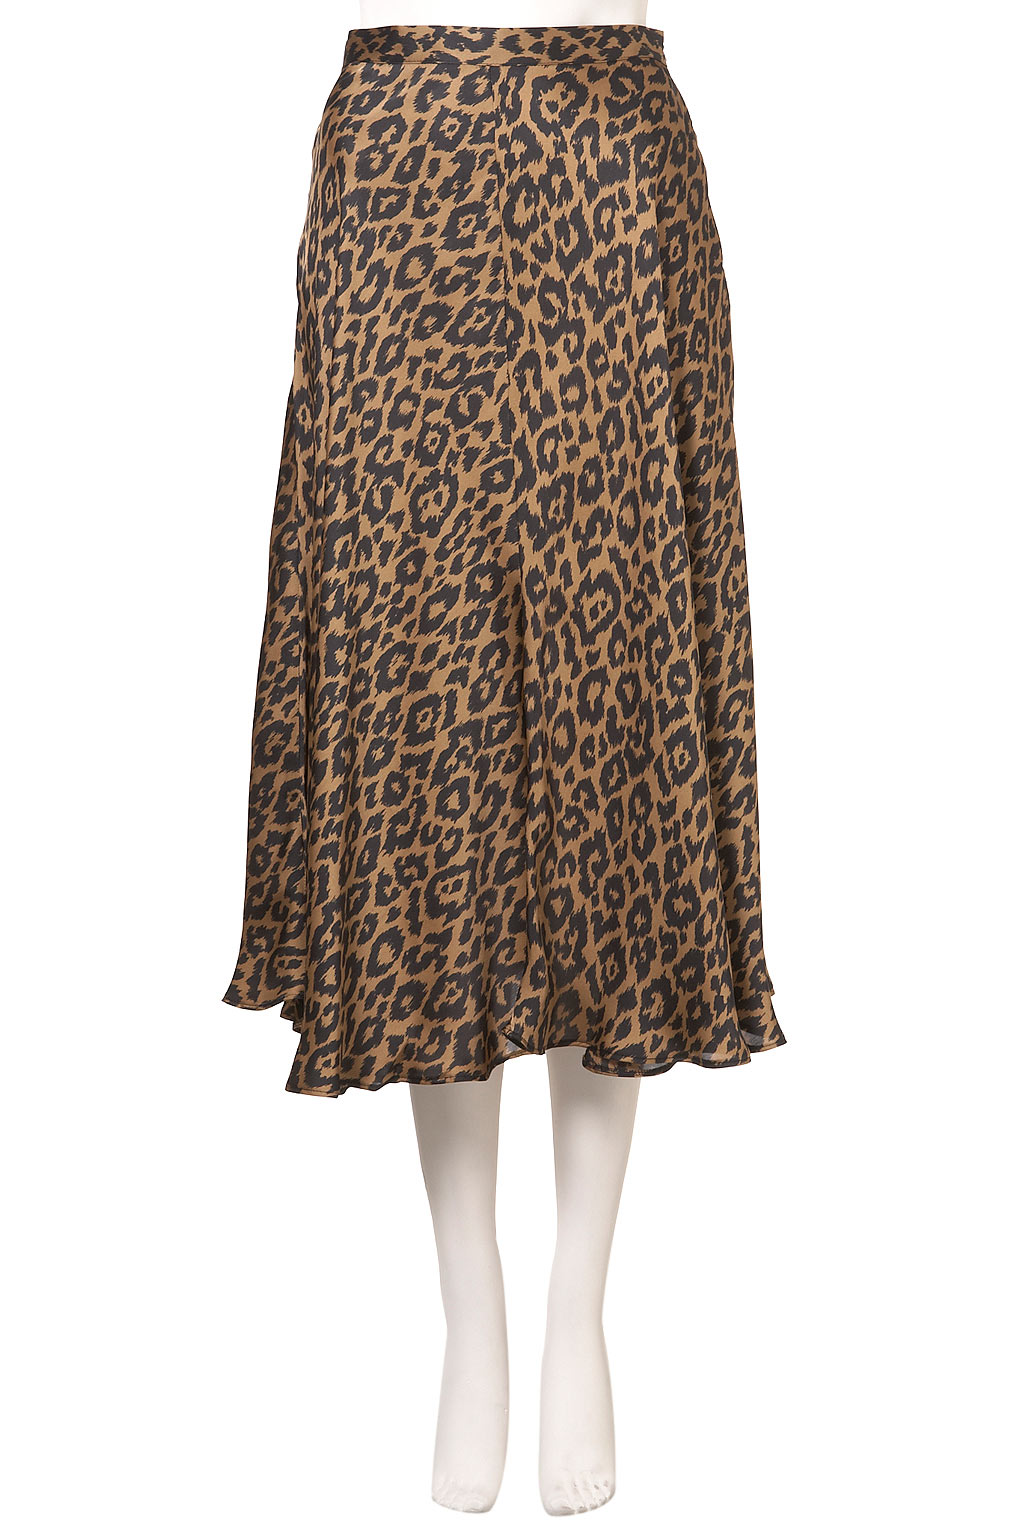 Lyst - TOPSHOP Animal Print Midi Skirt in Brown